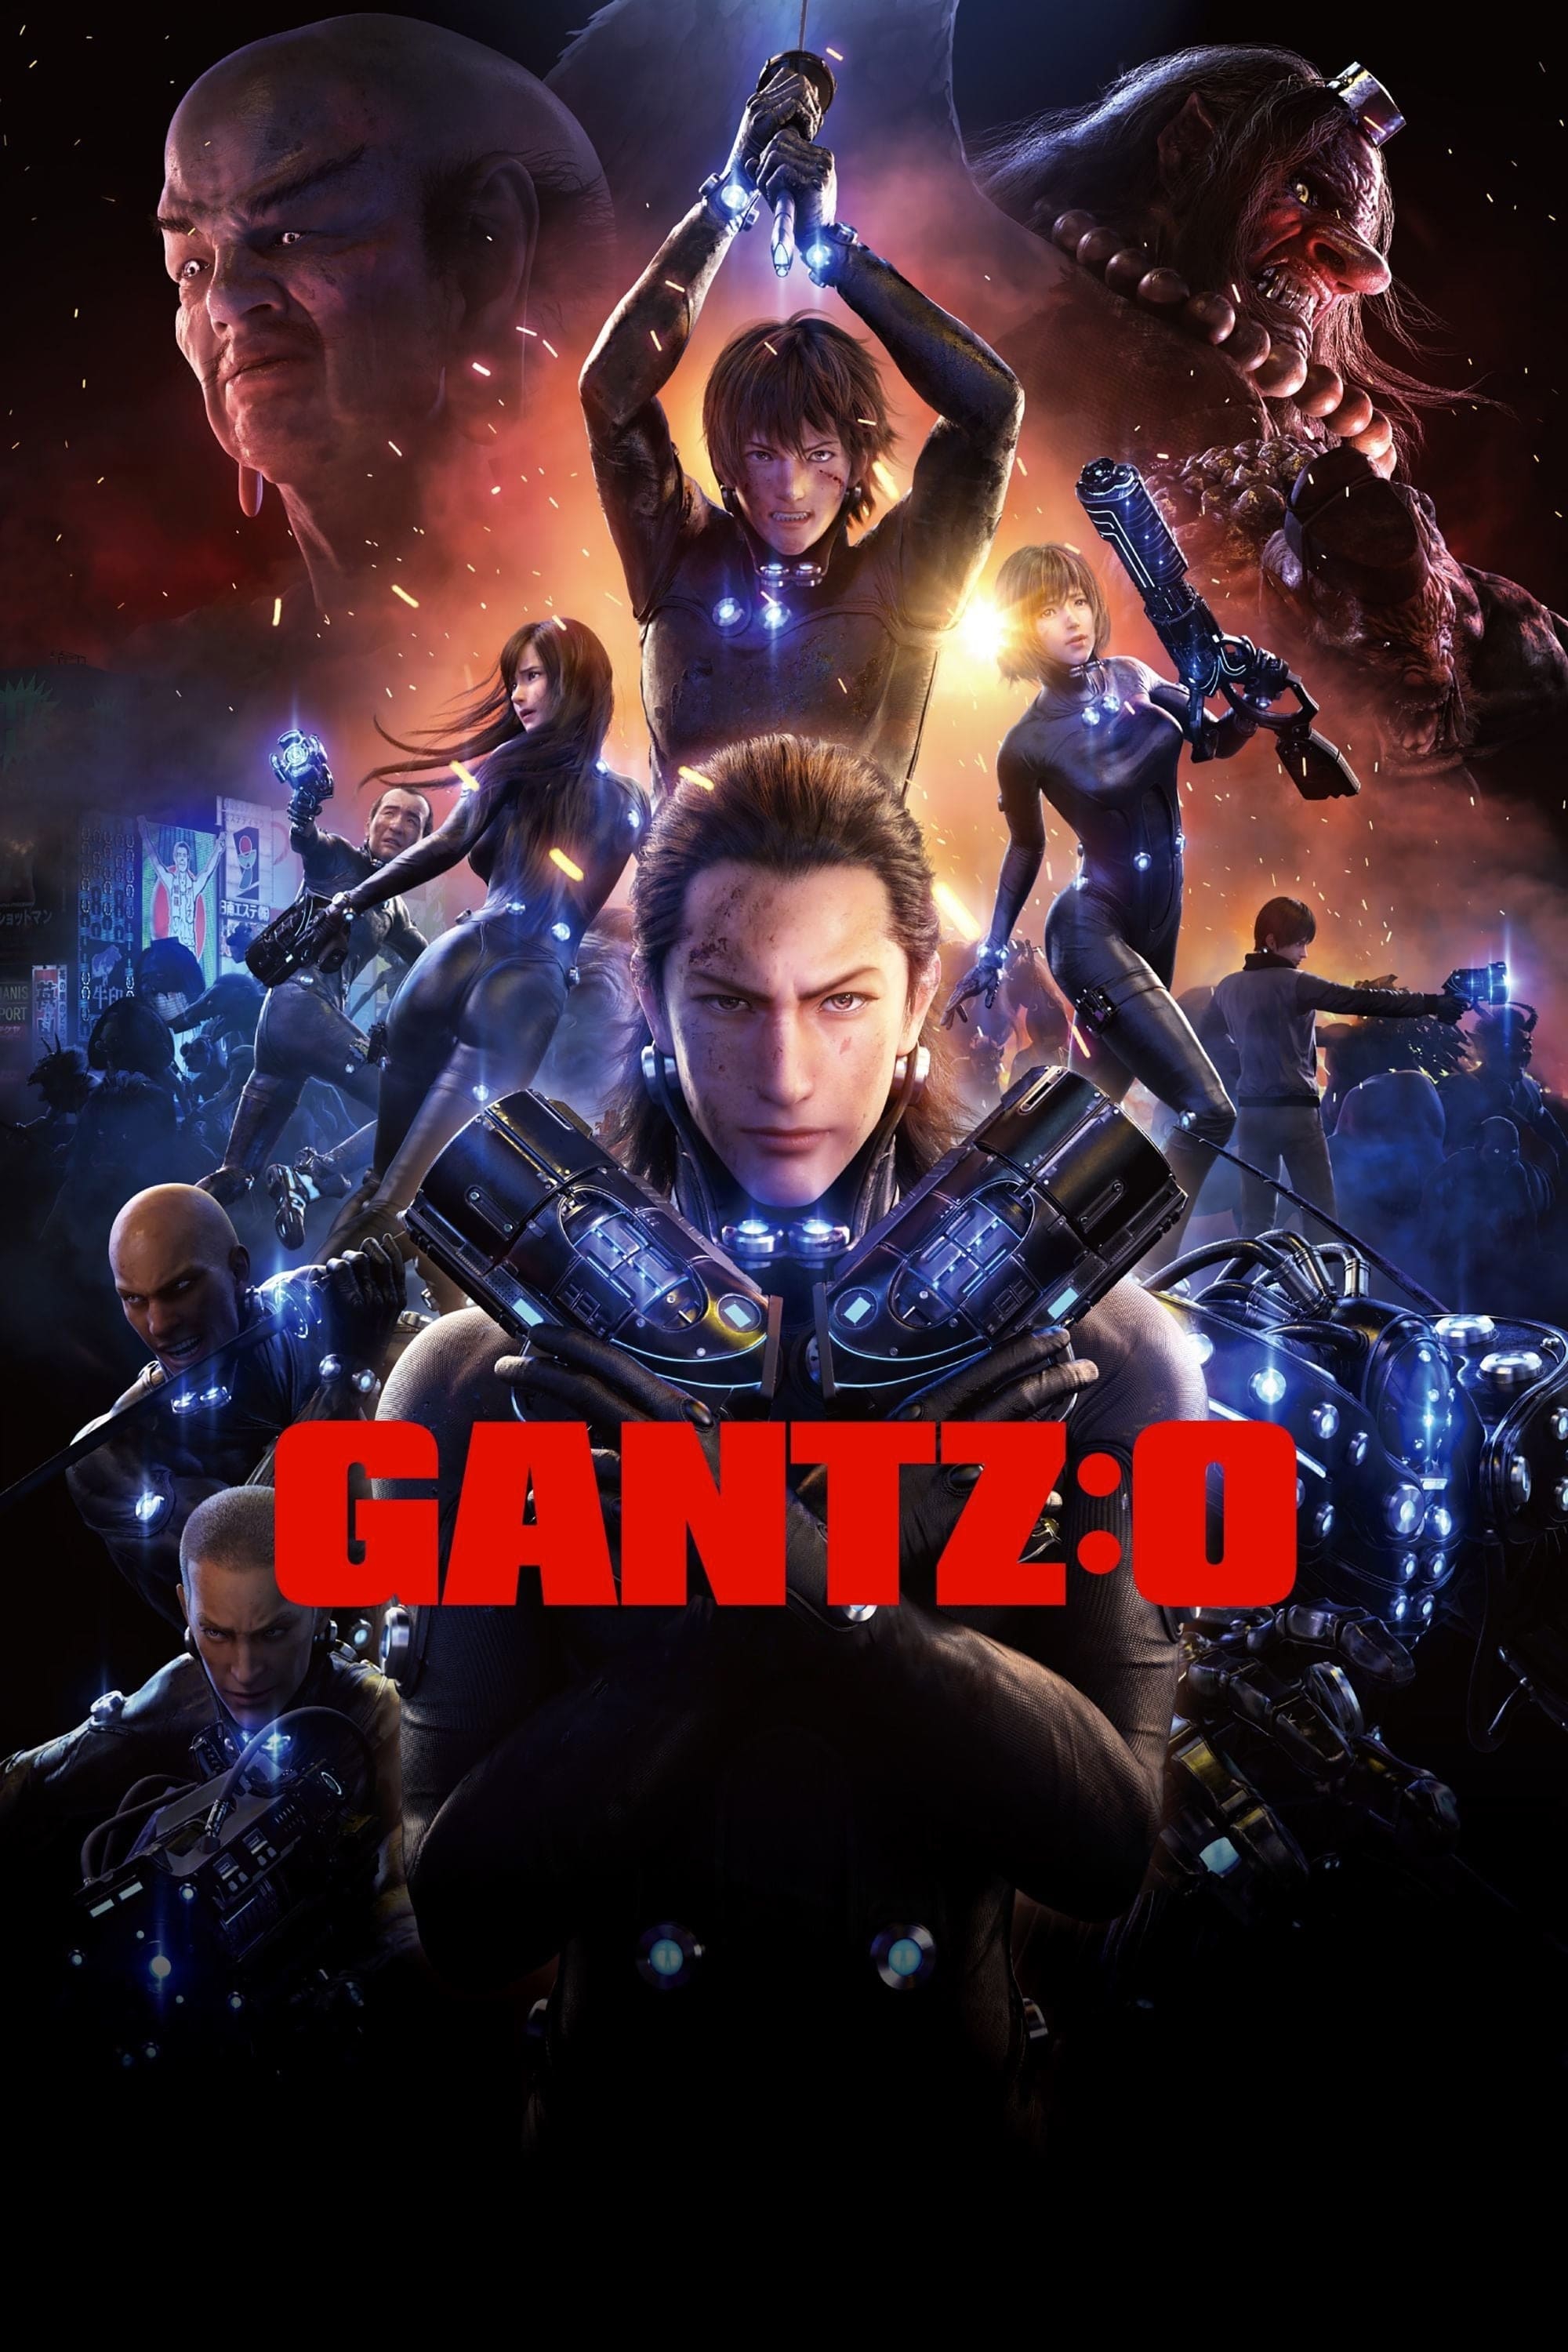 Gantz: O (2016)